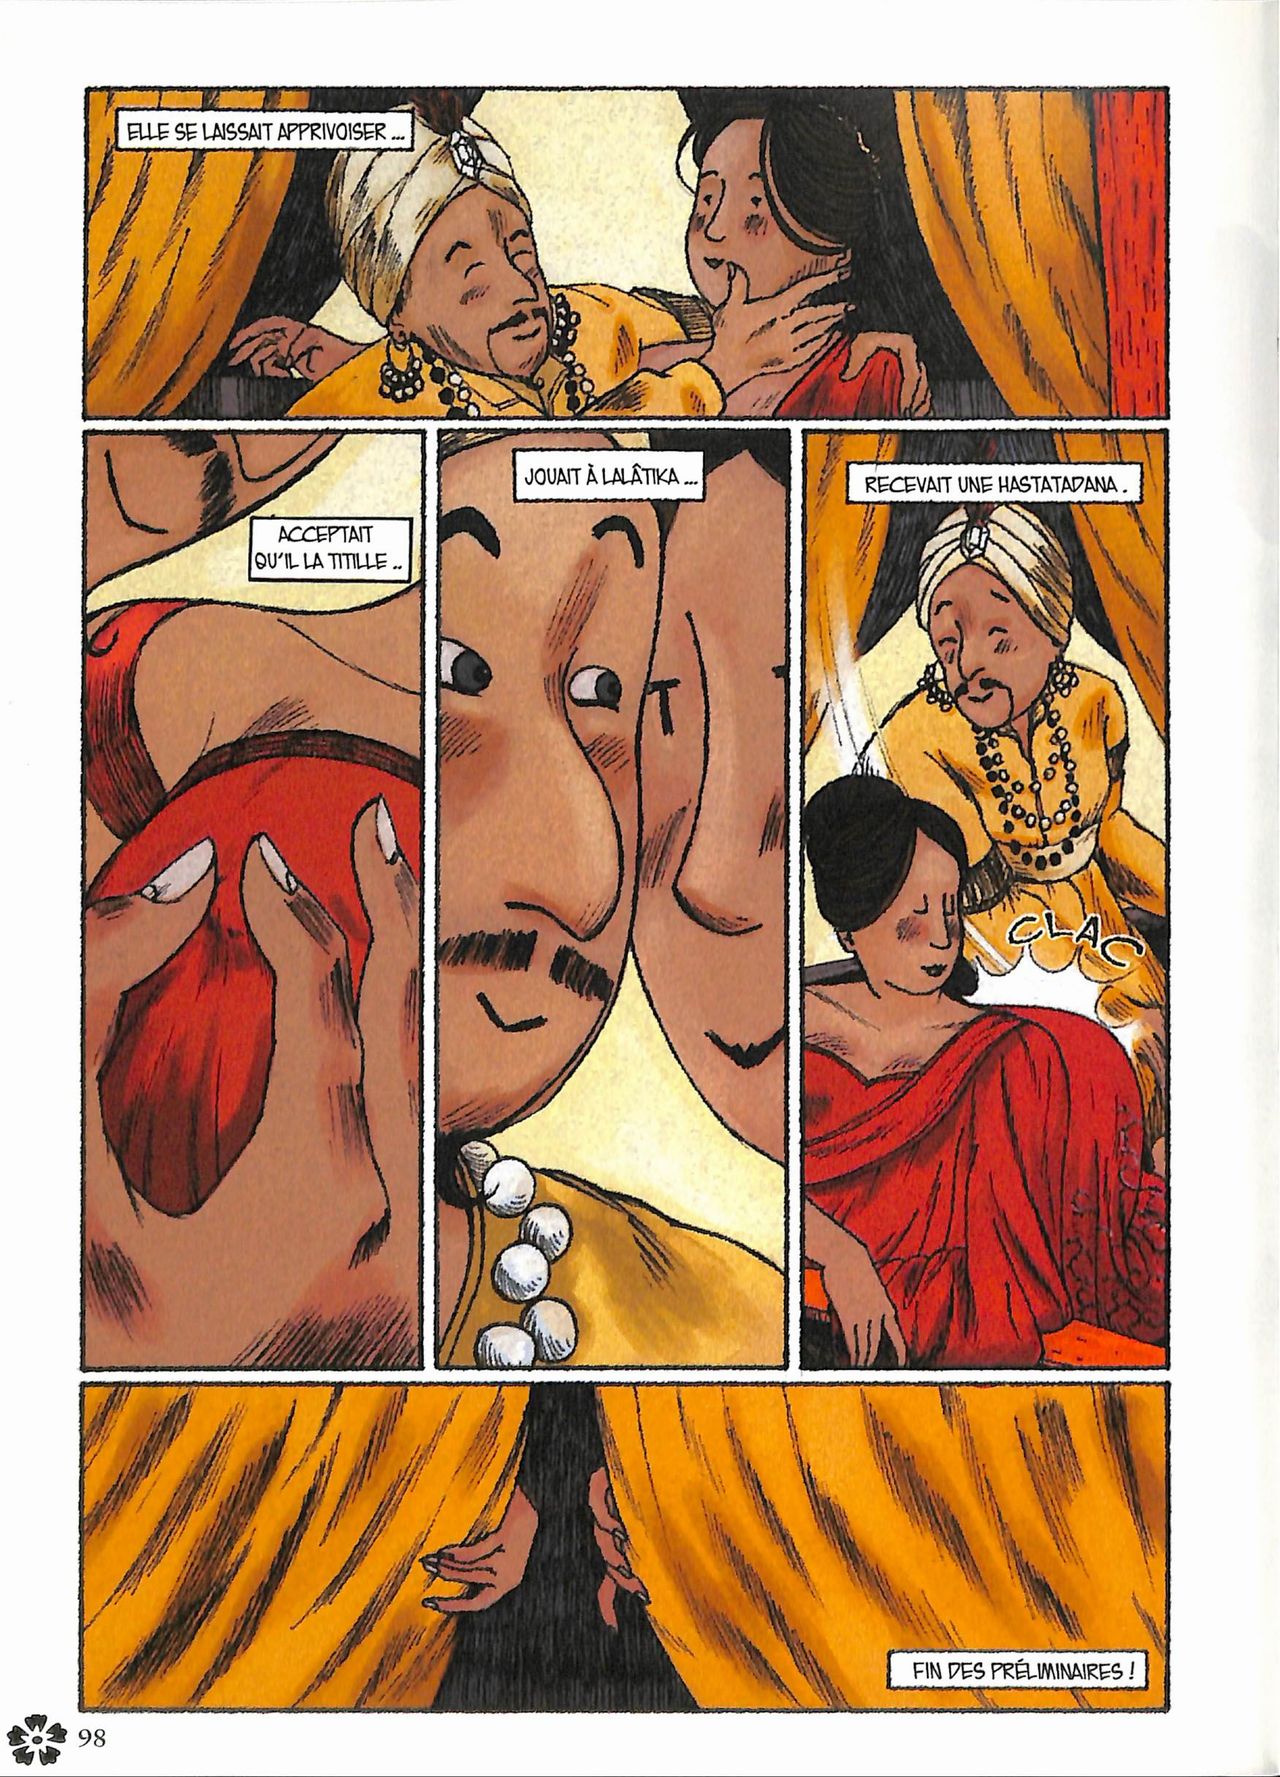 Kama Sutra en bandes dessinées - Kama Sutra with Comics numero d'image 99